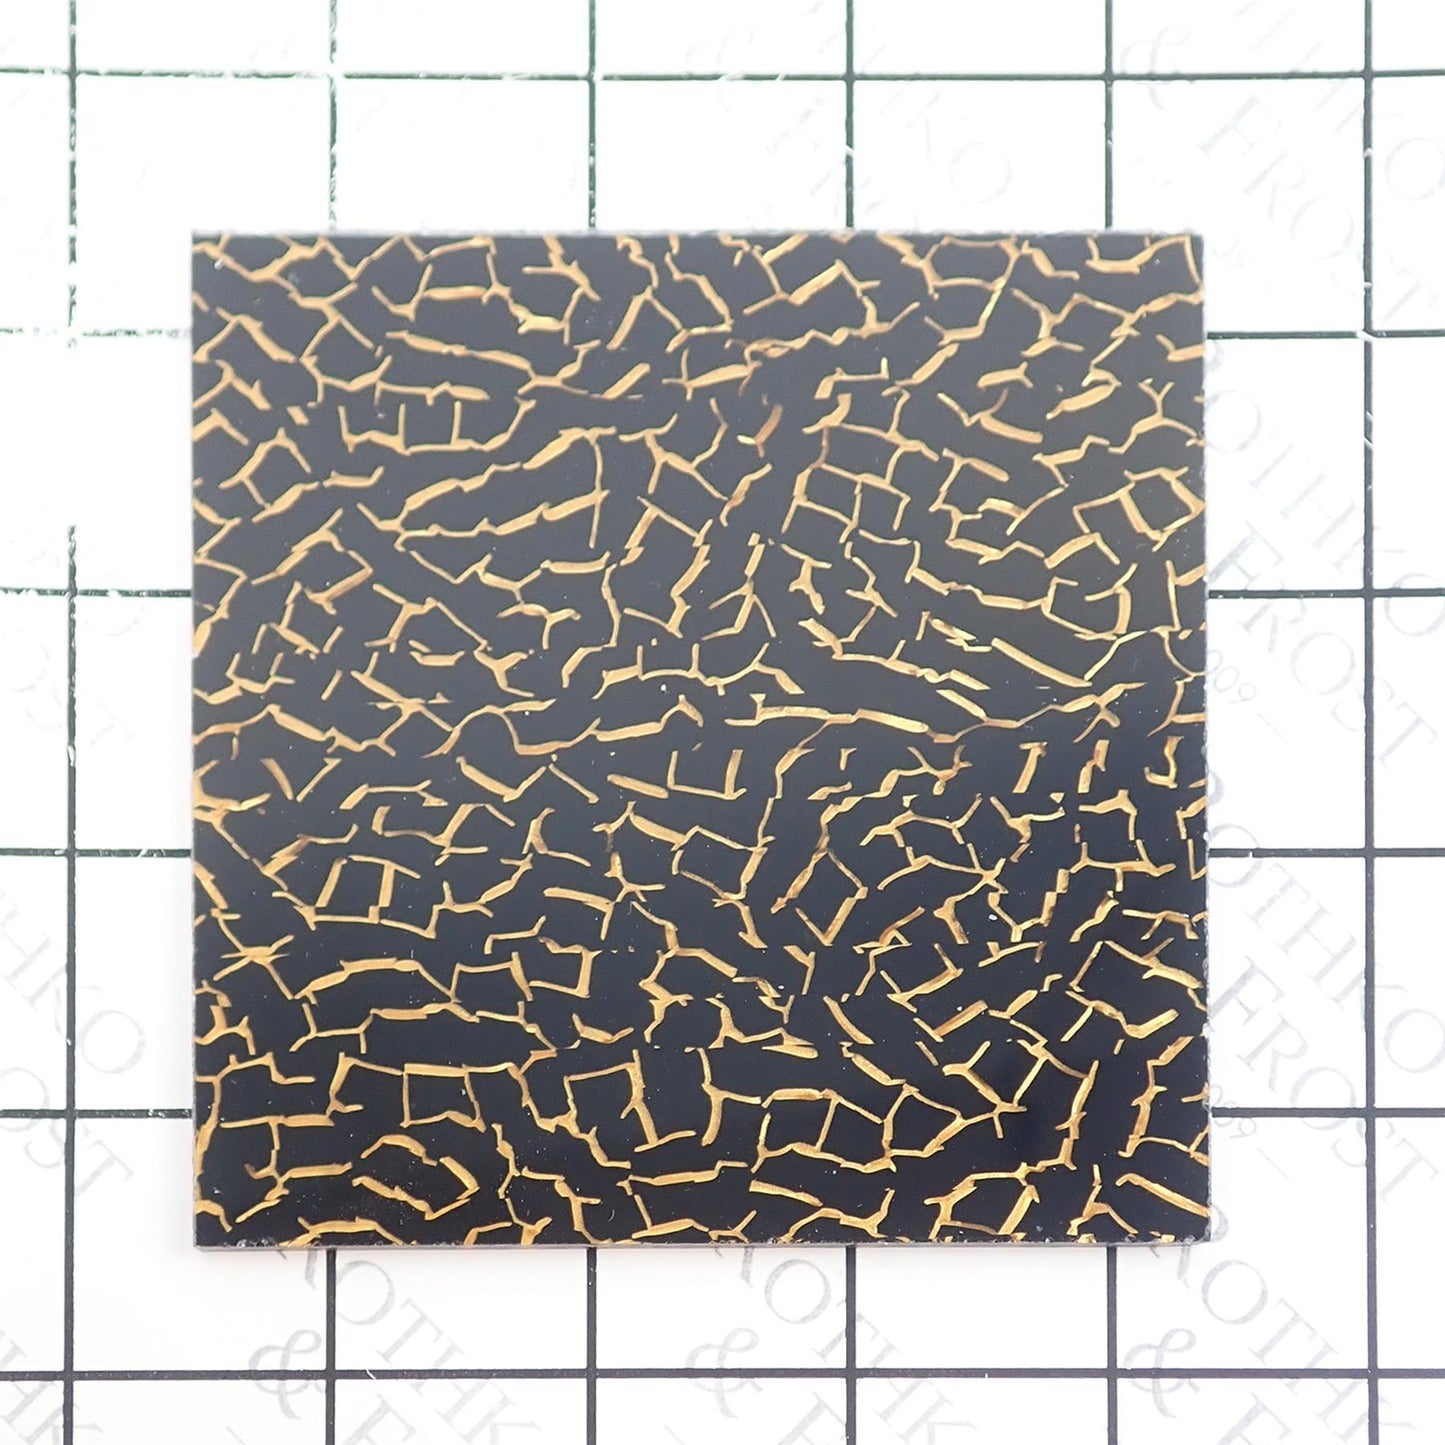 Incudo Black Crackle Celluloid Laminate Acrylic Sheet - 300x250x3mm